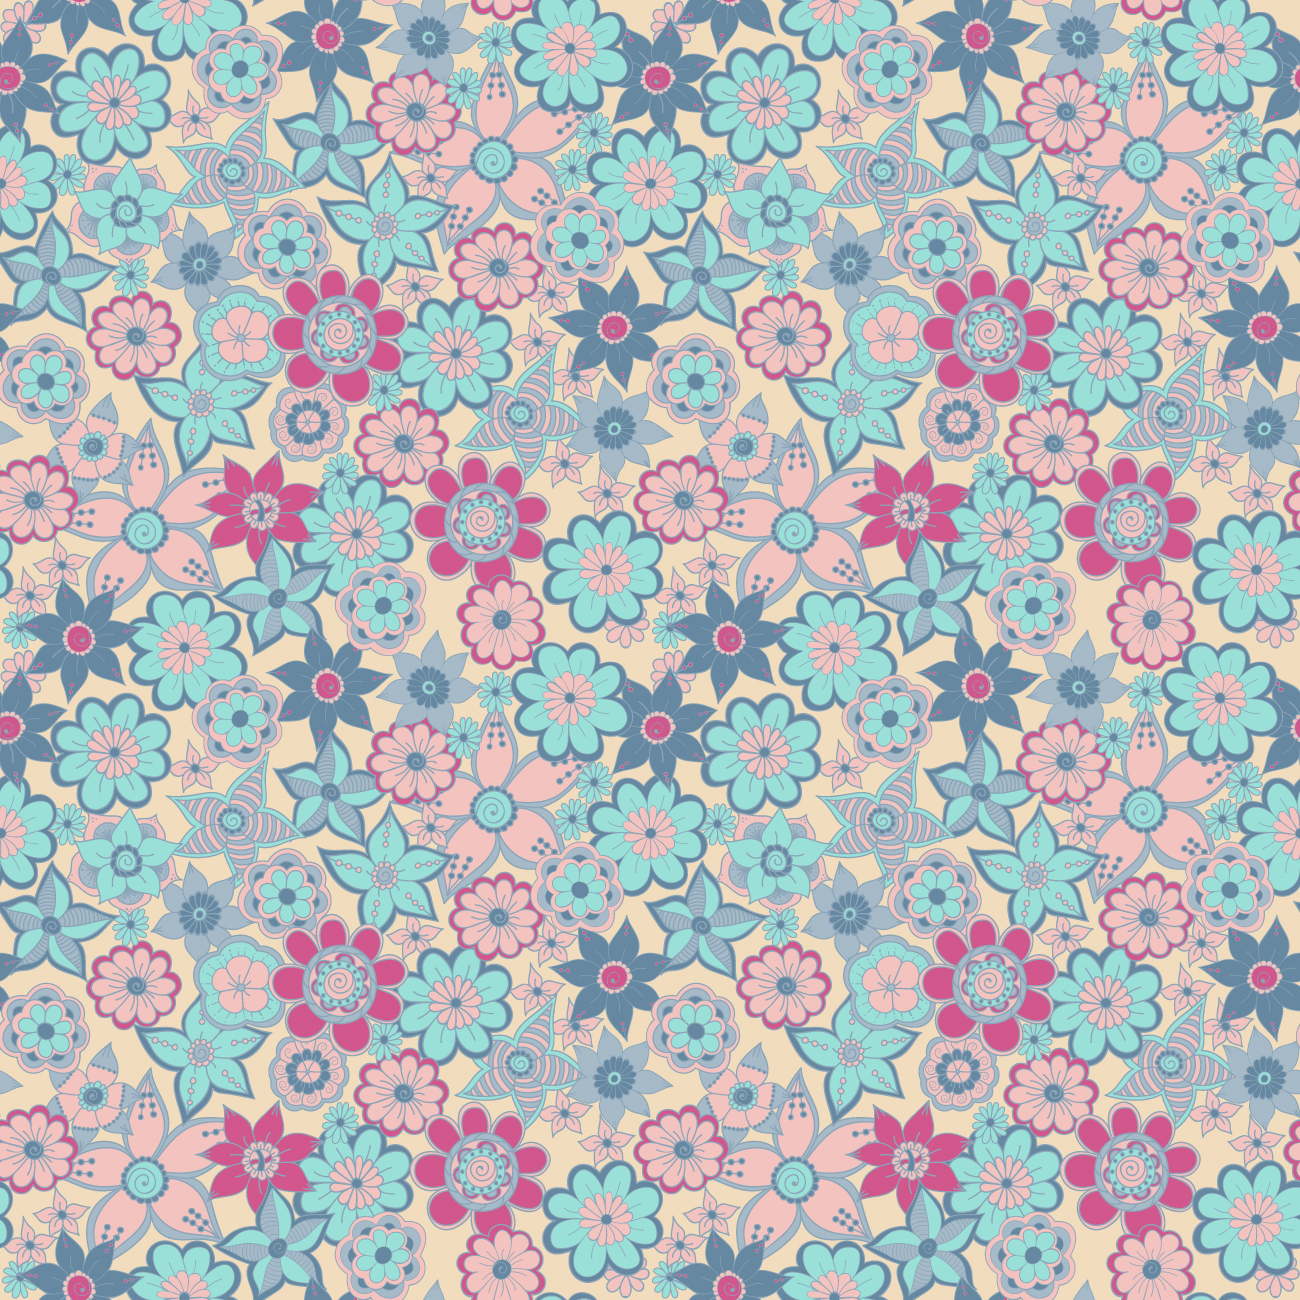 Wallpapers lots of flowers wallpaper texture on the desktop